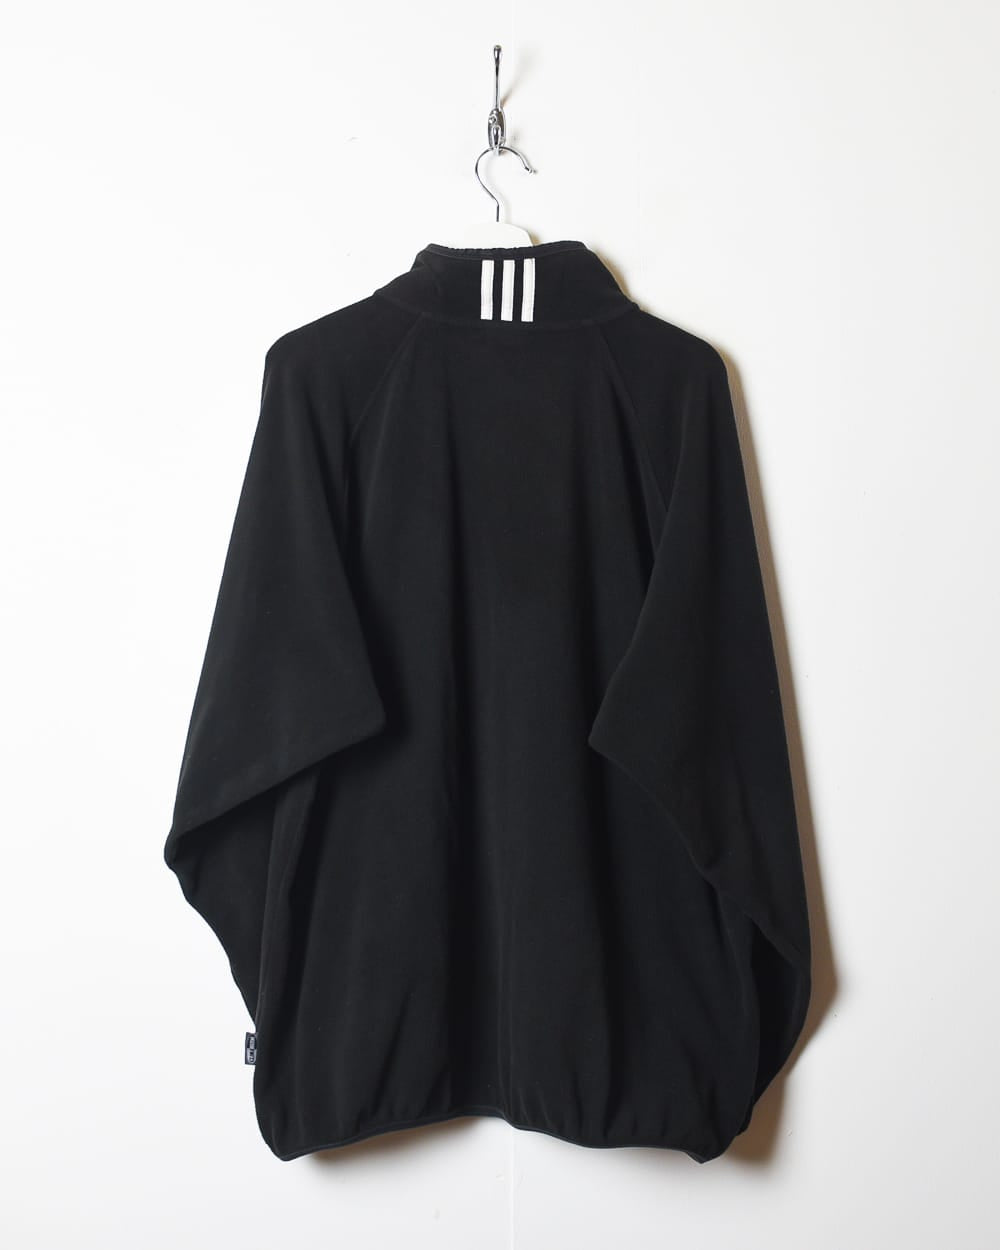 Black Adidas Golf 1/4 Zip Fleece - X-Large